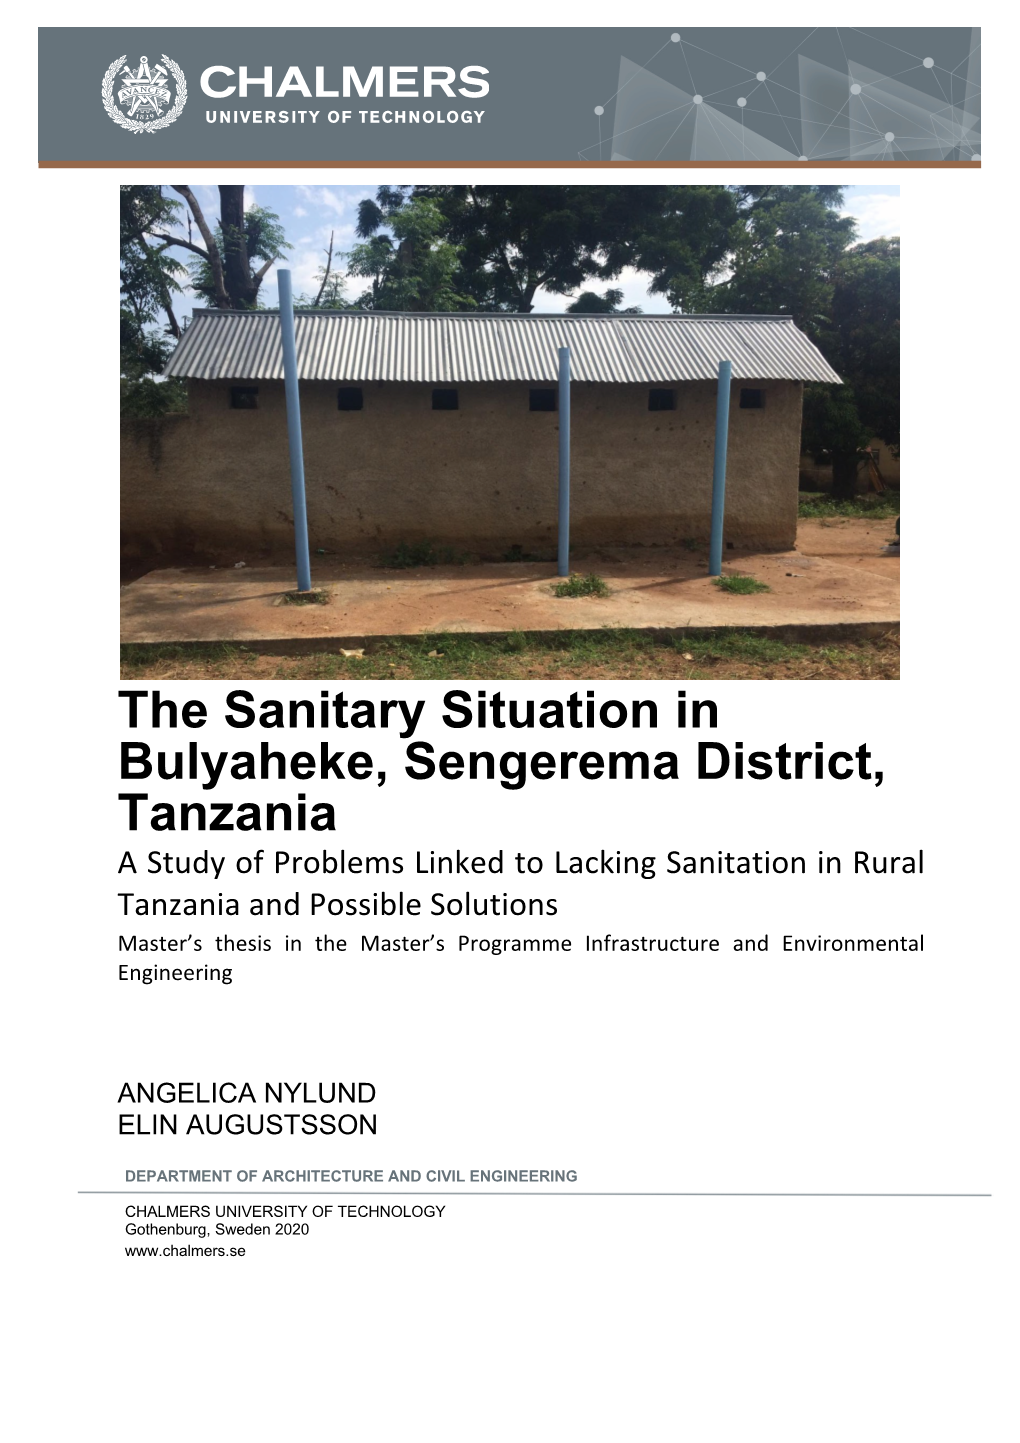 The Sanitary Situation in Bulyaheke, Sengerema District, Tanzania